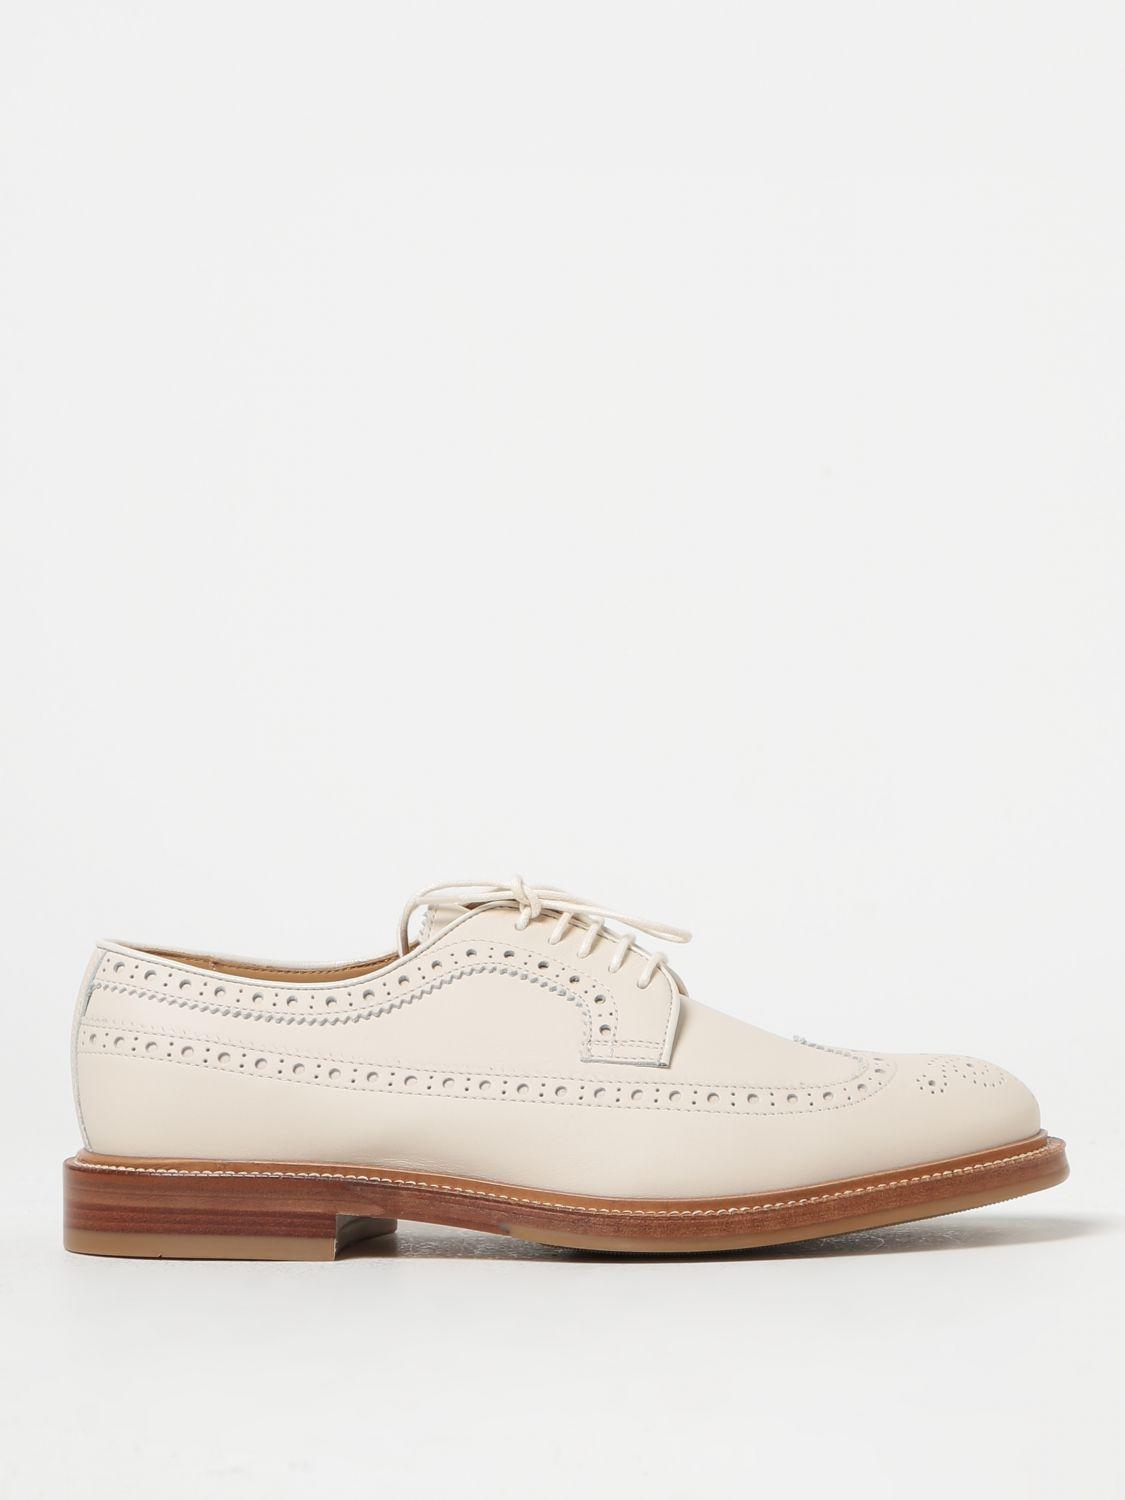 Brunello Cucinelli Brogue Shoes in White for Men